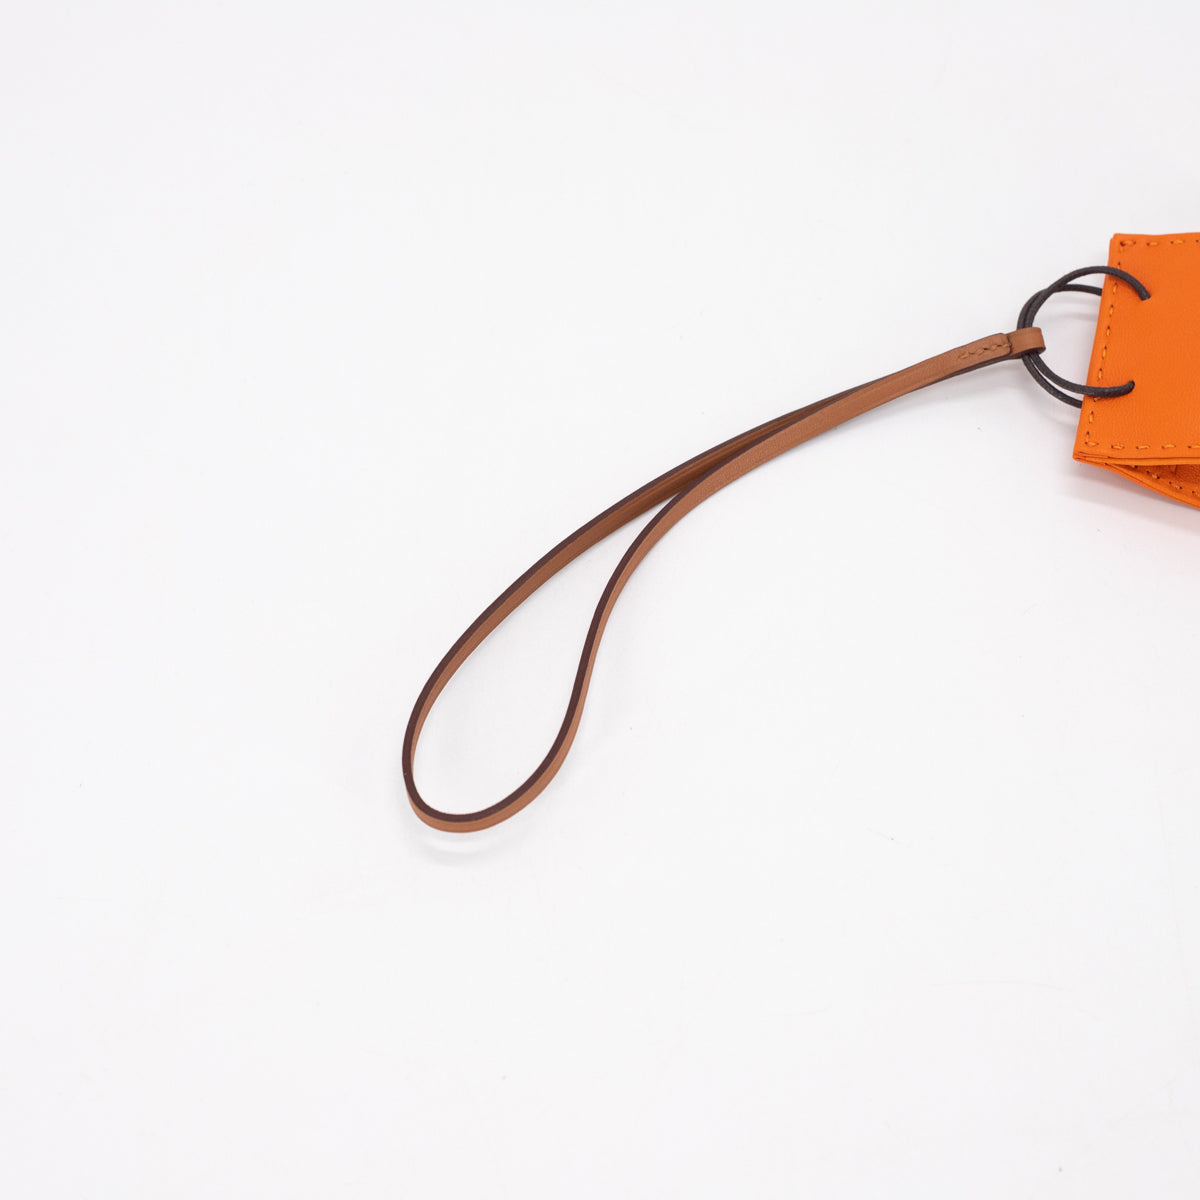 Hermes Orange Mini Shopping Bag Charm – Madison Avenue Couture